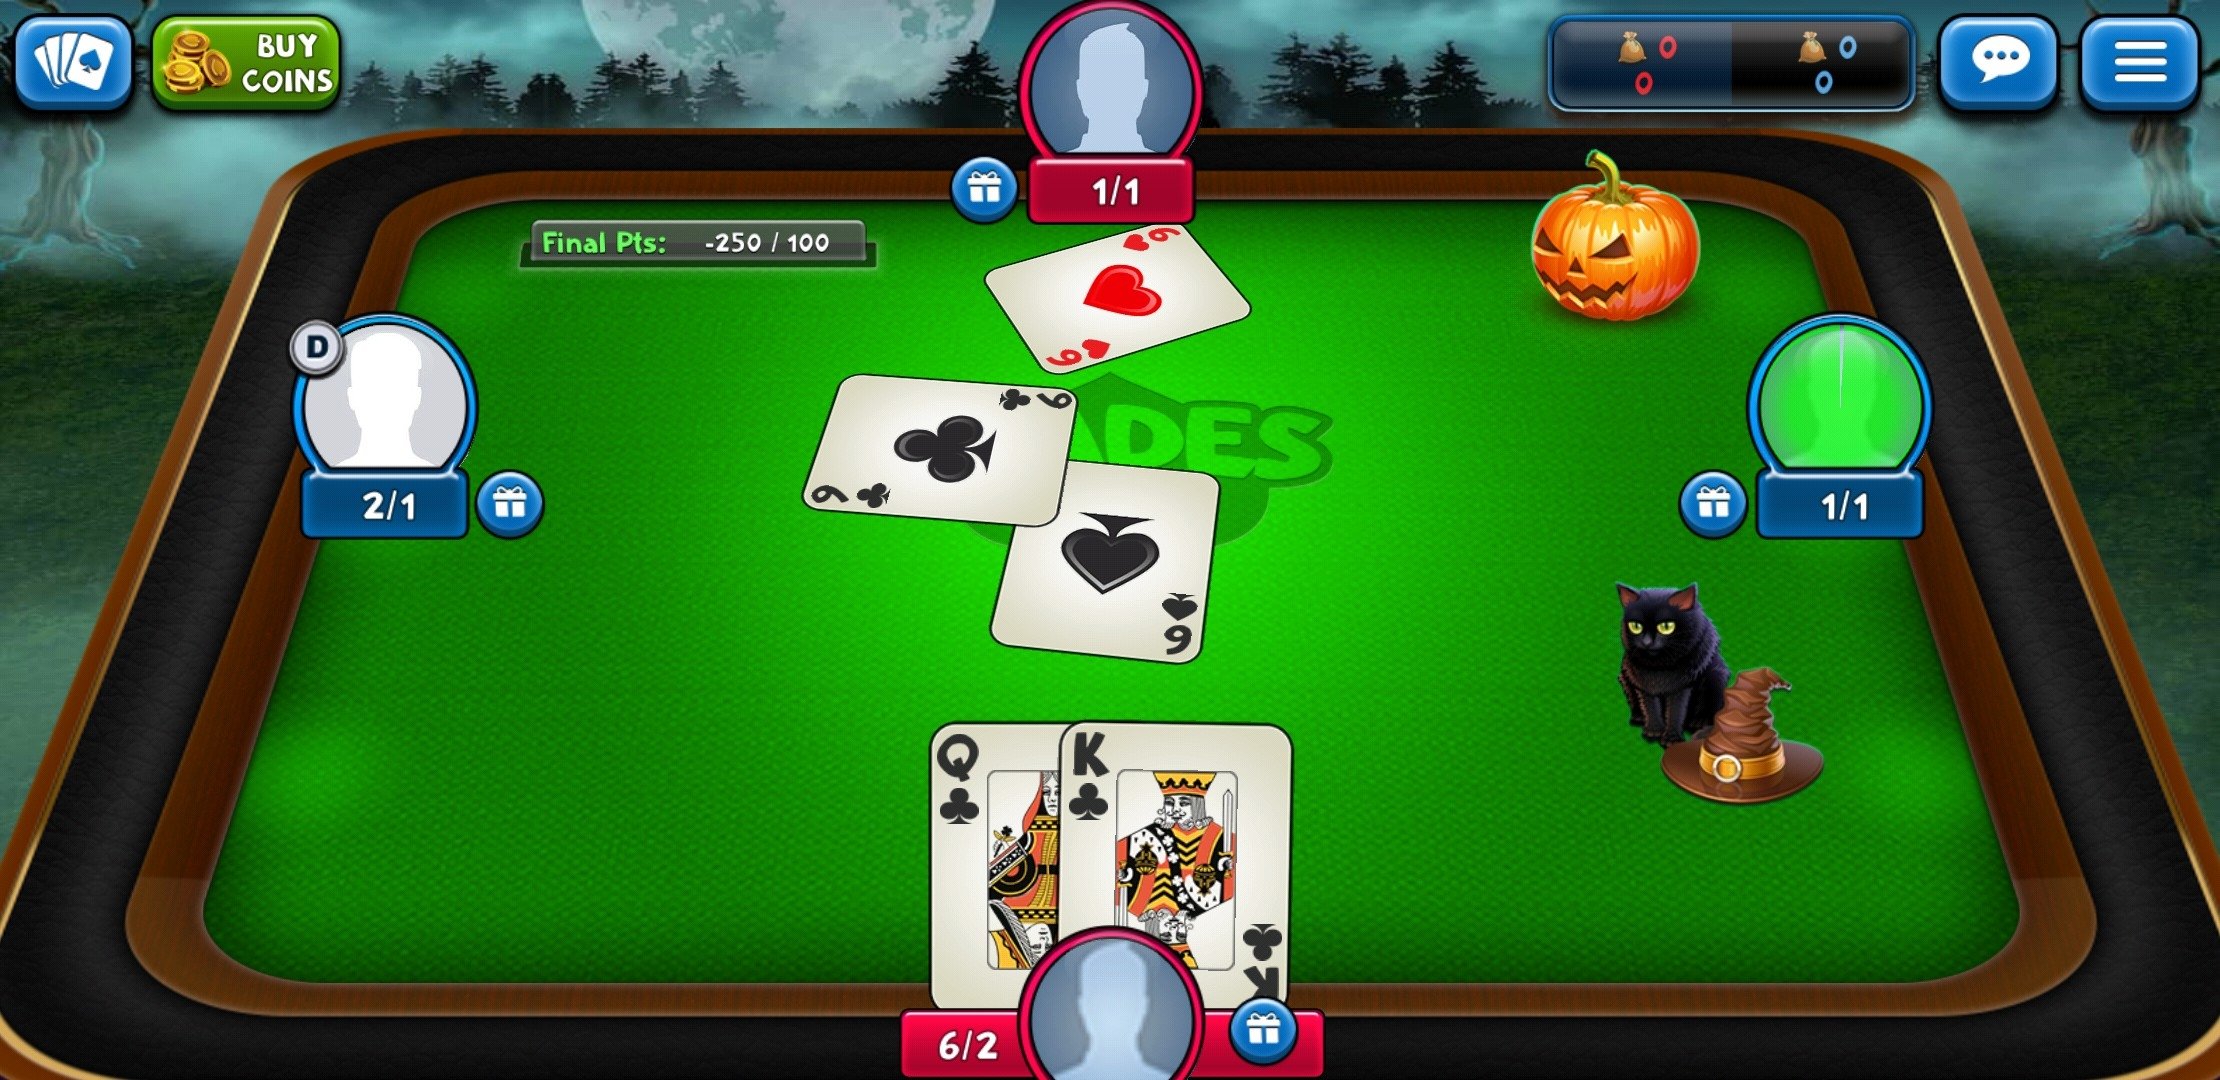 spades plus game